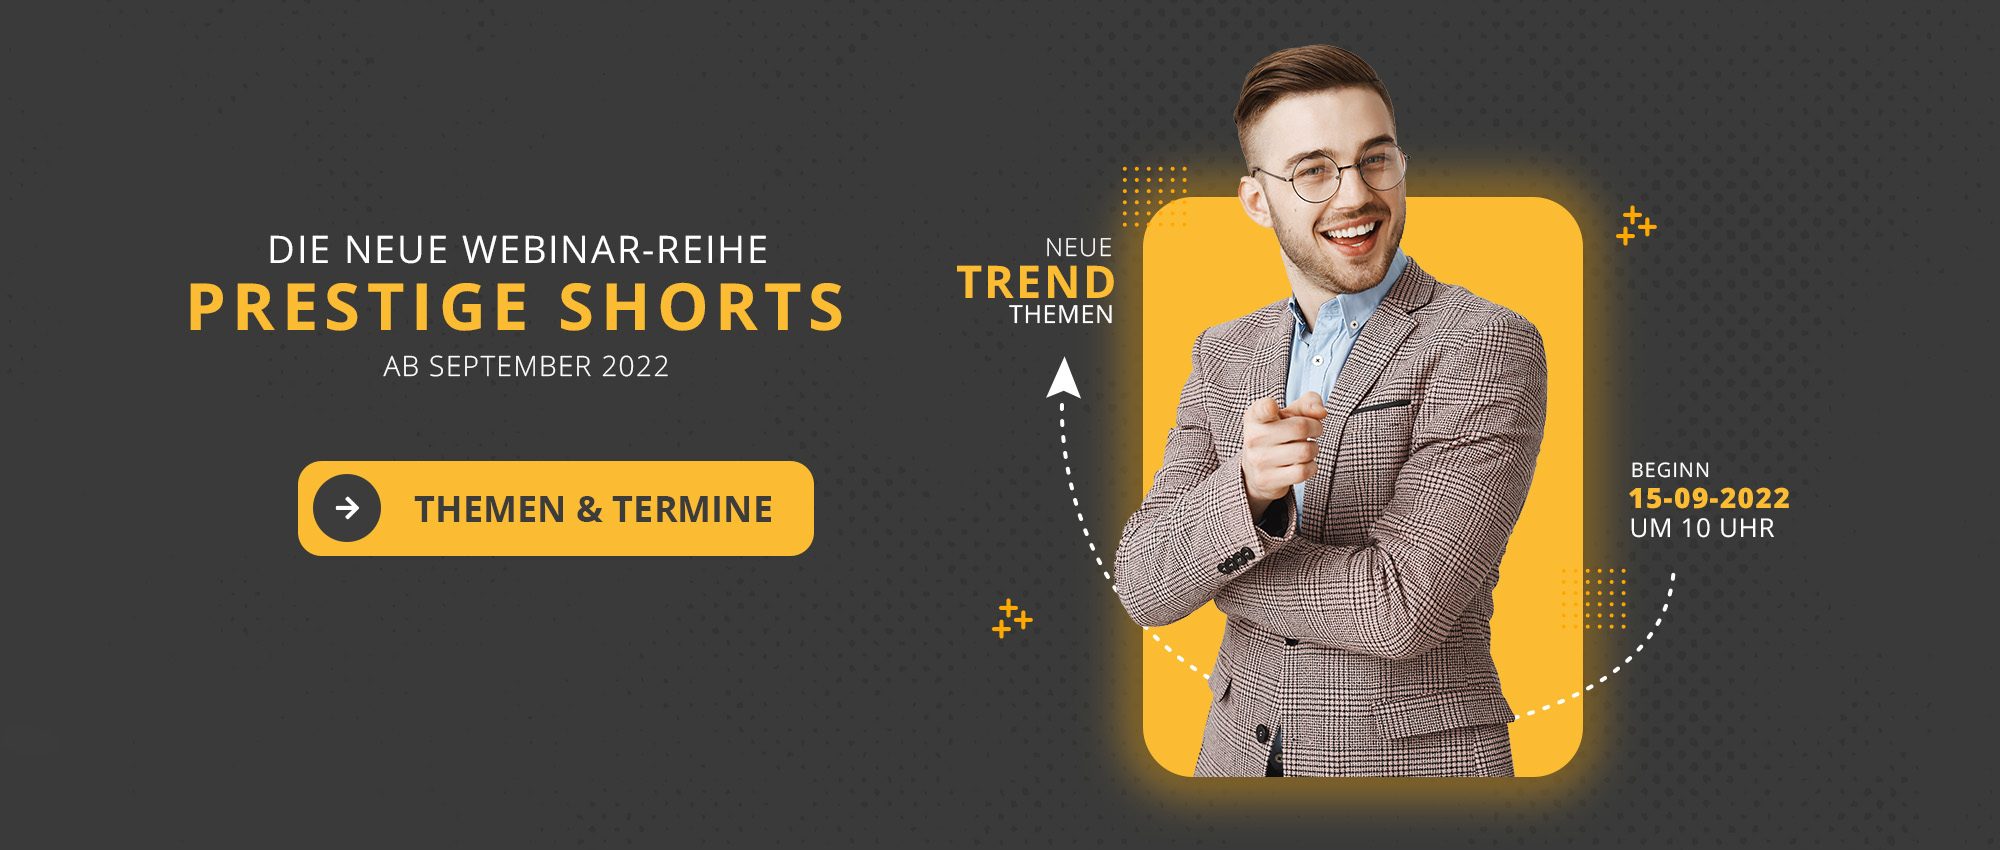 PRESTIGE Shorts - Neue Webinare